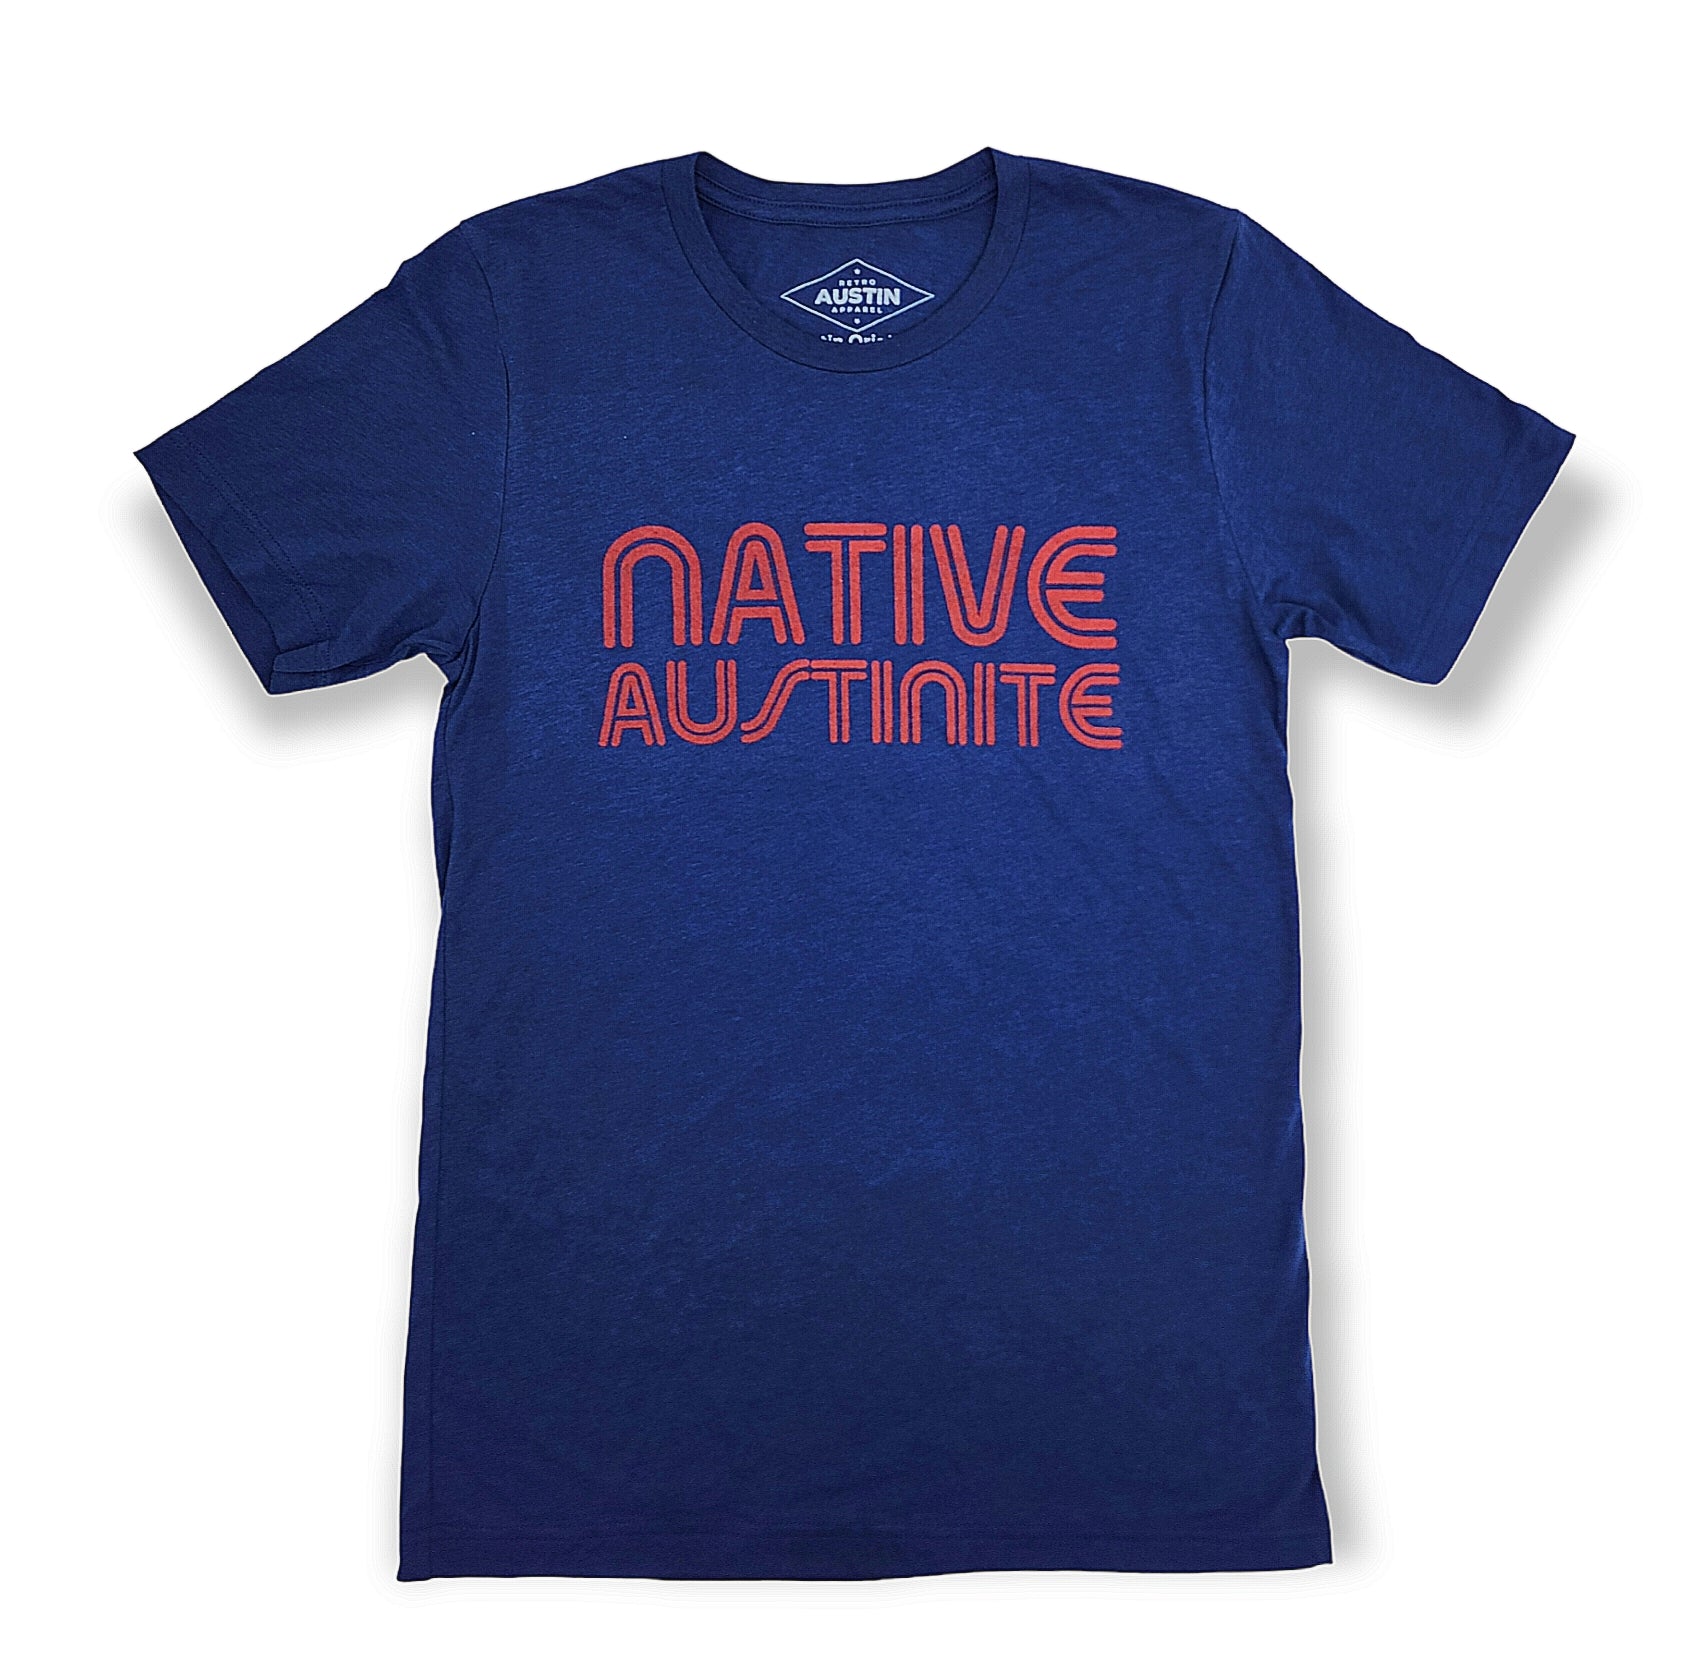 Native Austinite Retro Tee